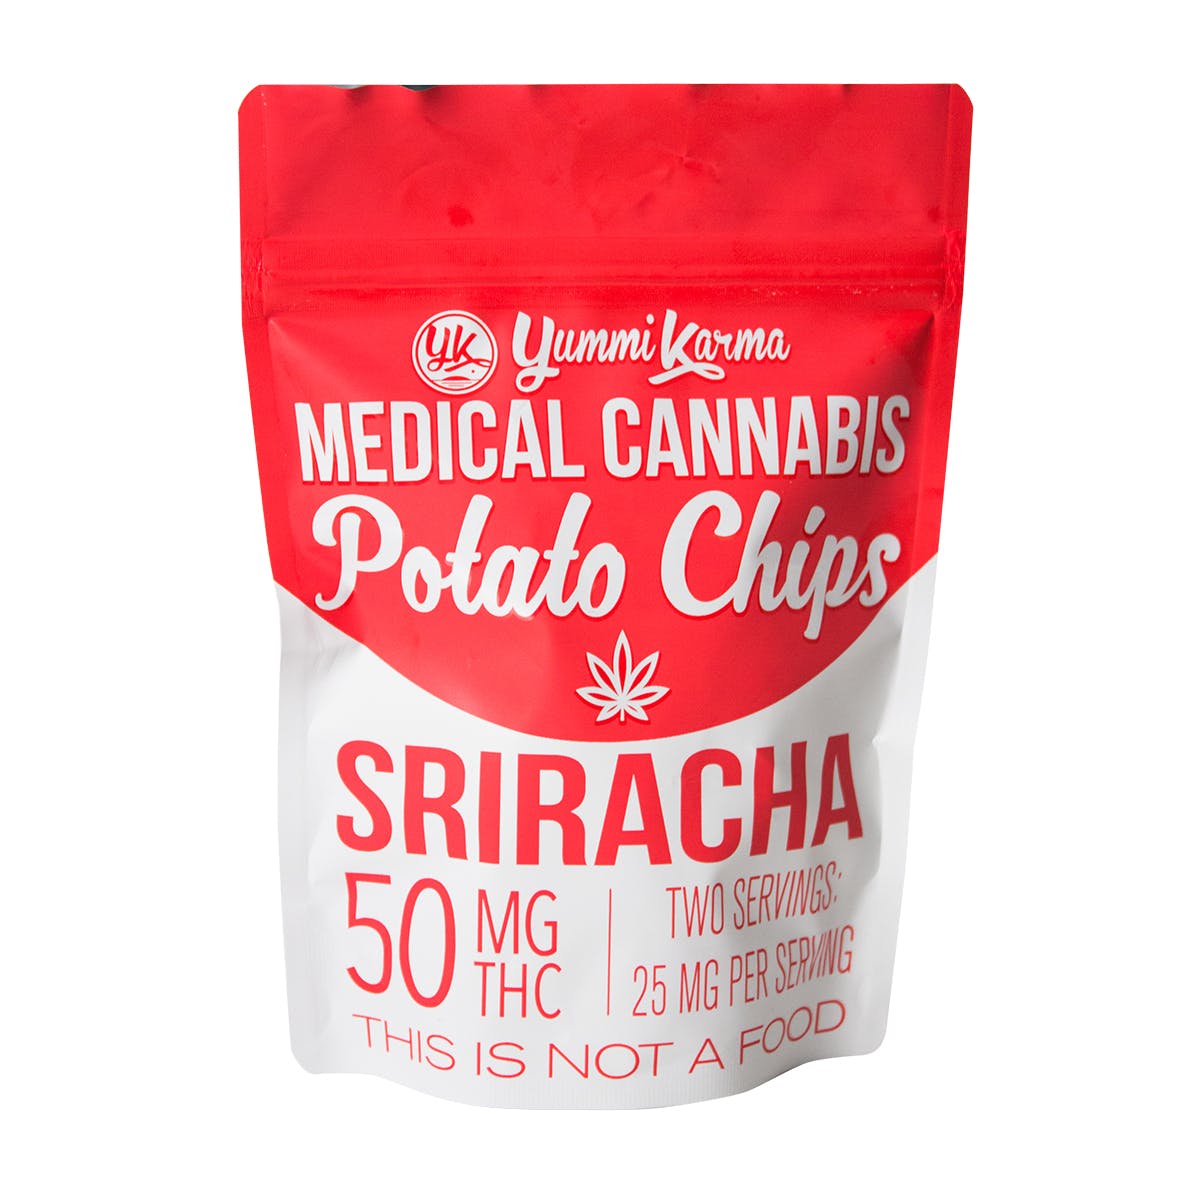 marijuana-dispensaries-natural-healing-remedies-in-bakersfield-medical-cannabis-potato-chips-2c-sriracha-50mg